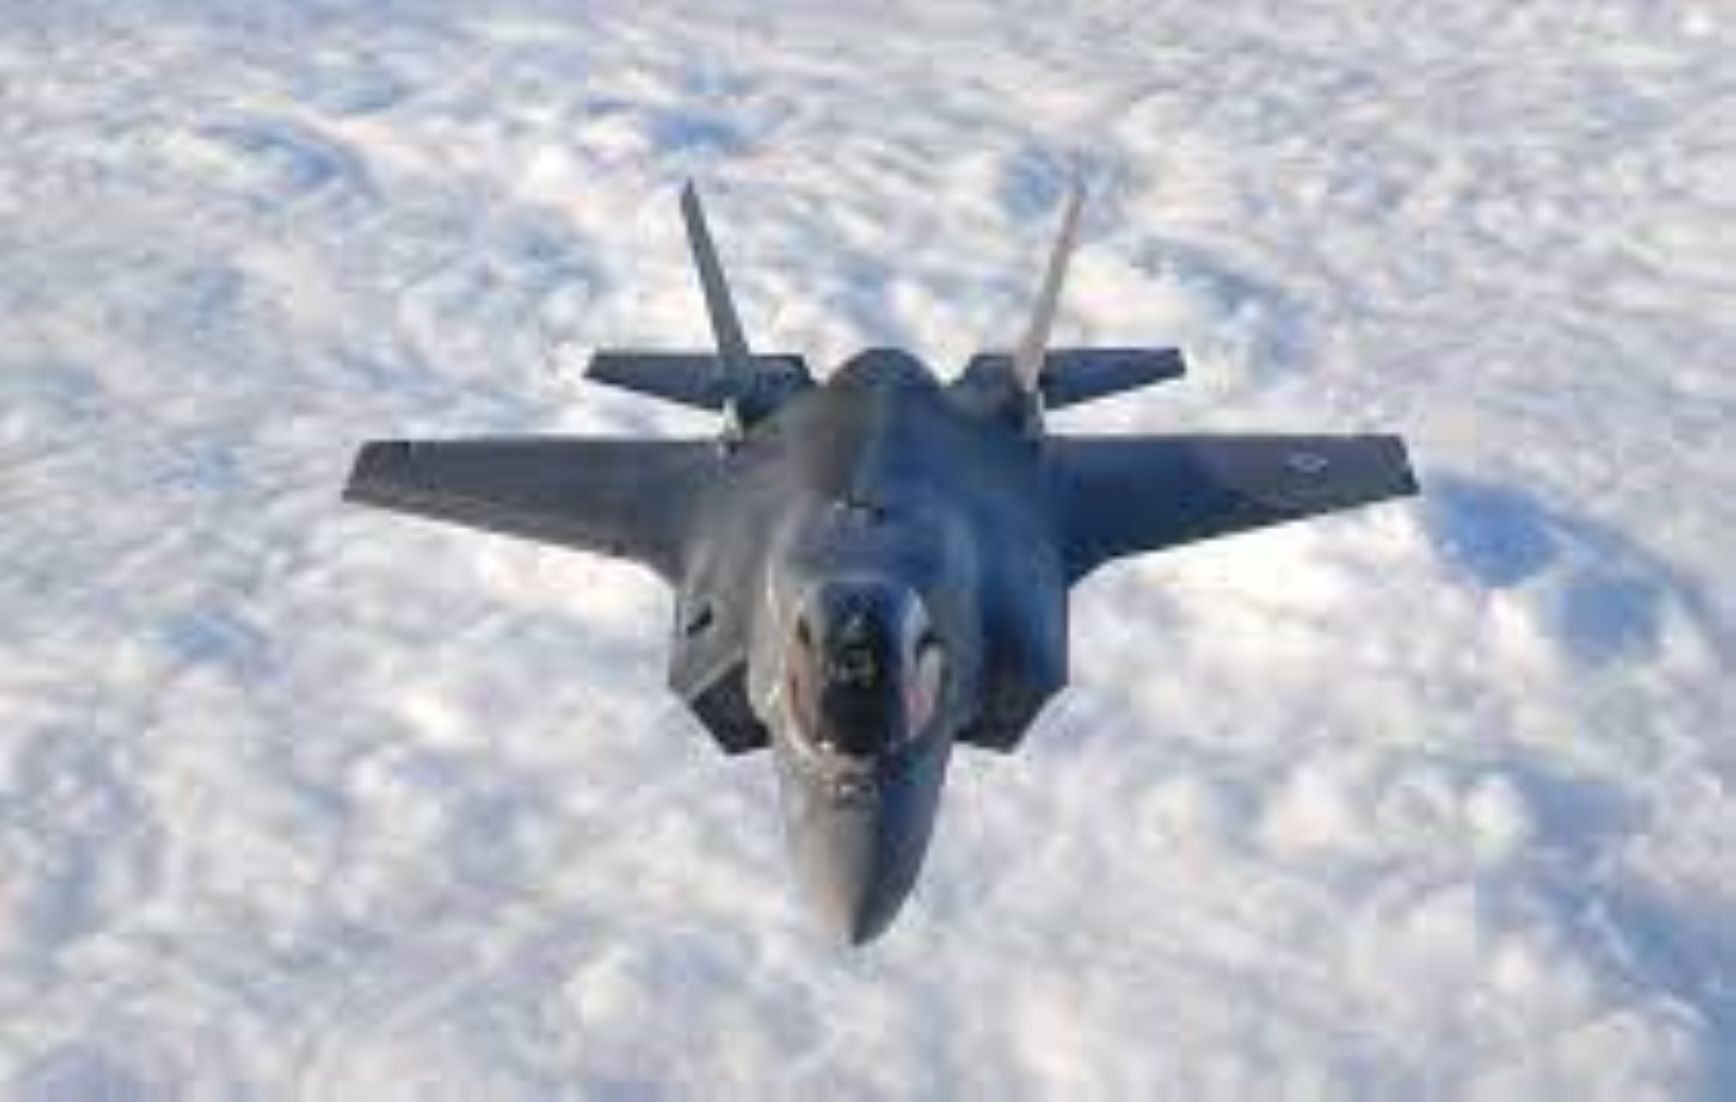 Czech Republic To Buy 24 U.S. Fighter Jets